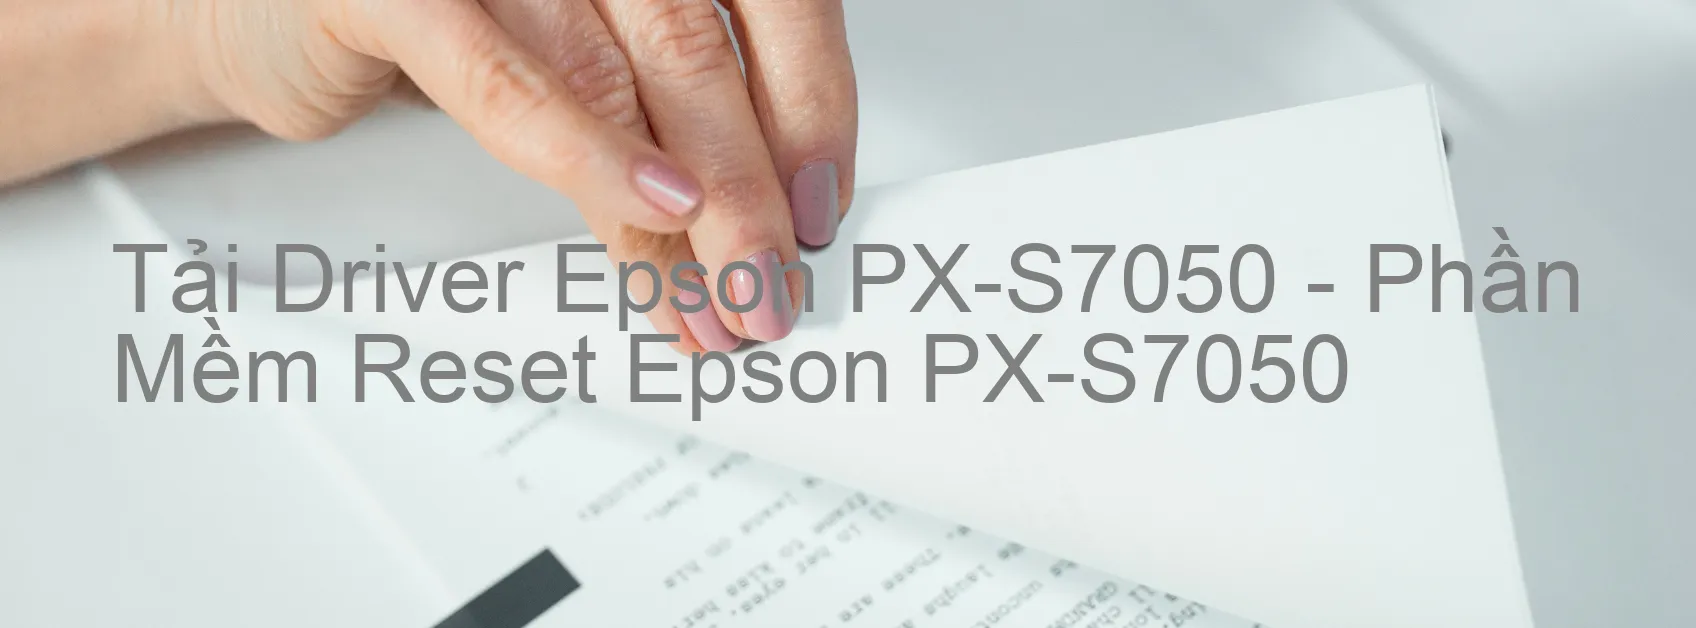 Driver Epson PX-S7050, Phần Mềm Reset Epson PX-S7050